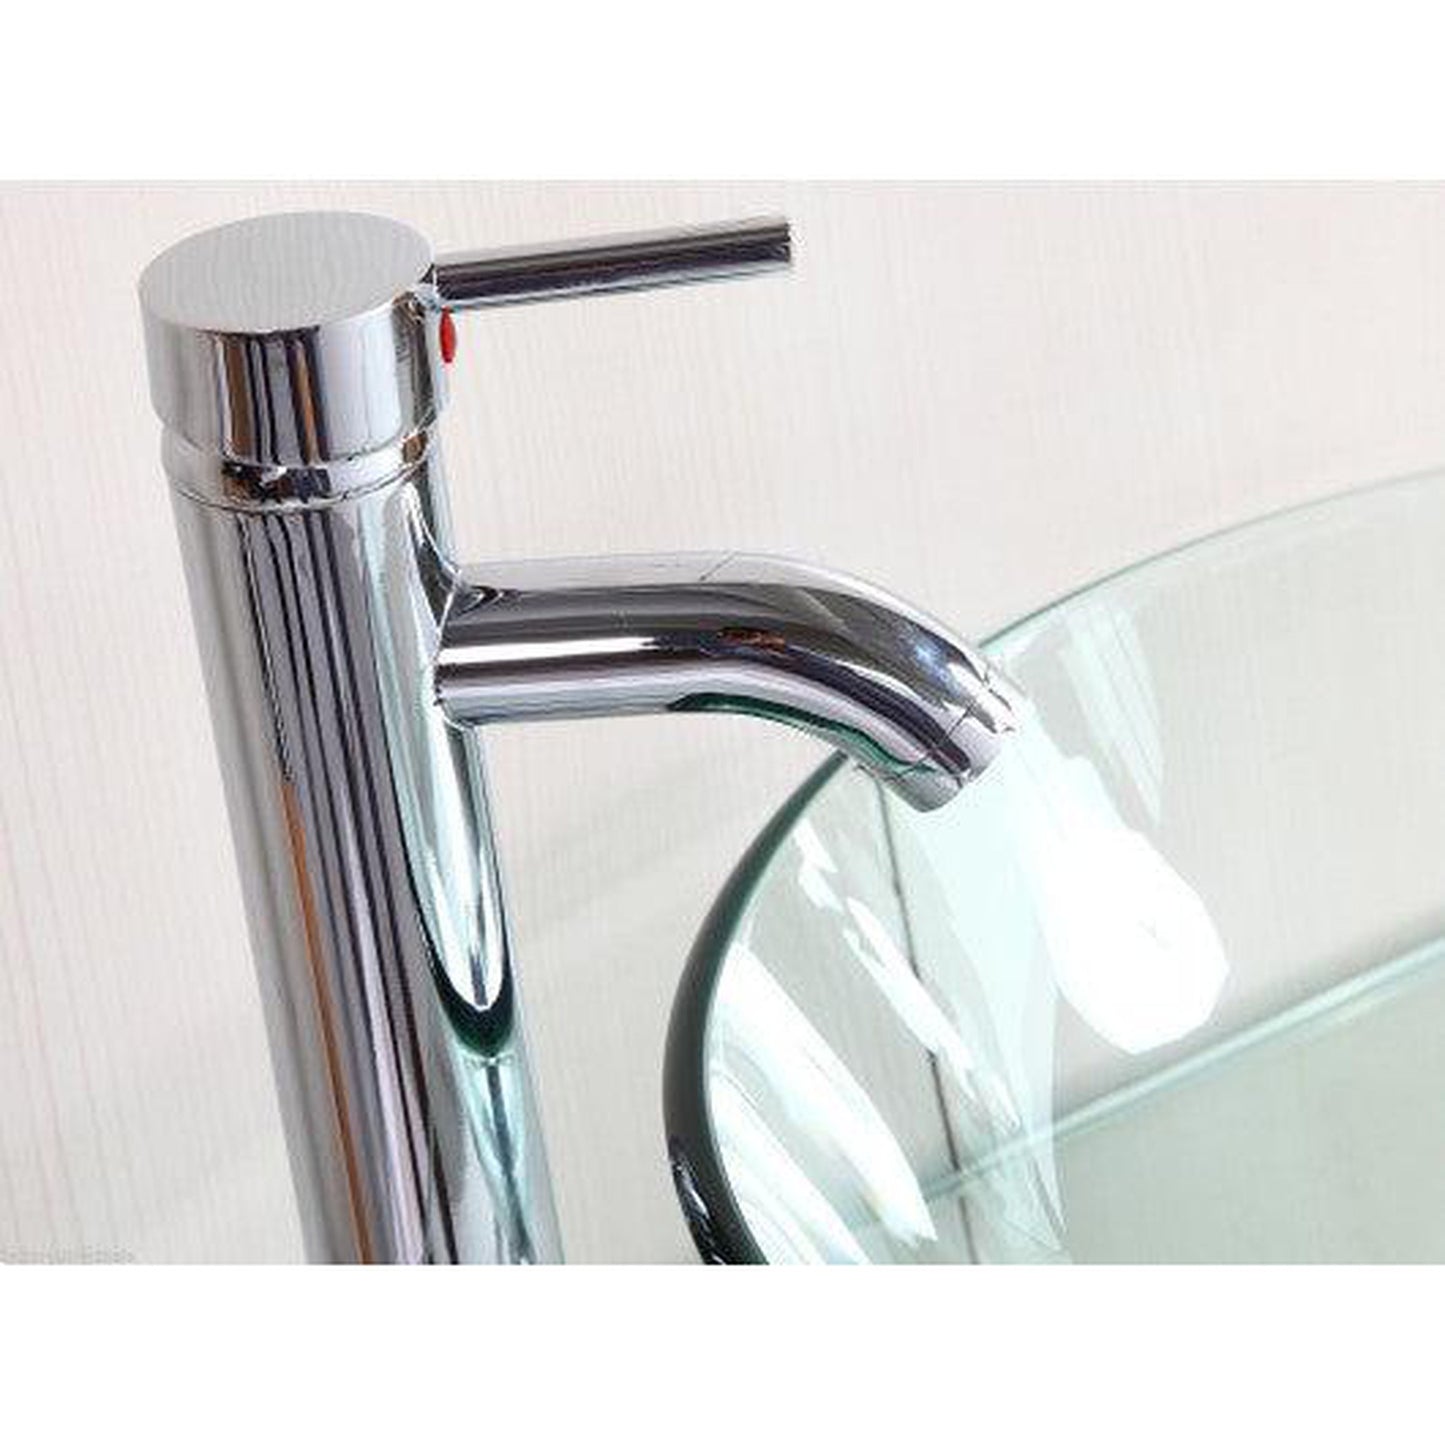 Costway Modern Bathroom Vanities Pedestal Vessel Glass Furniture Sink with Bath Faucet